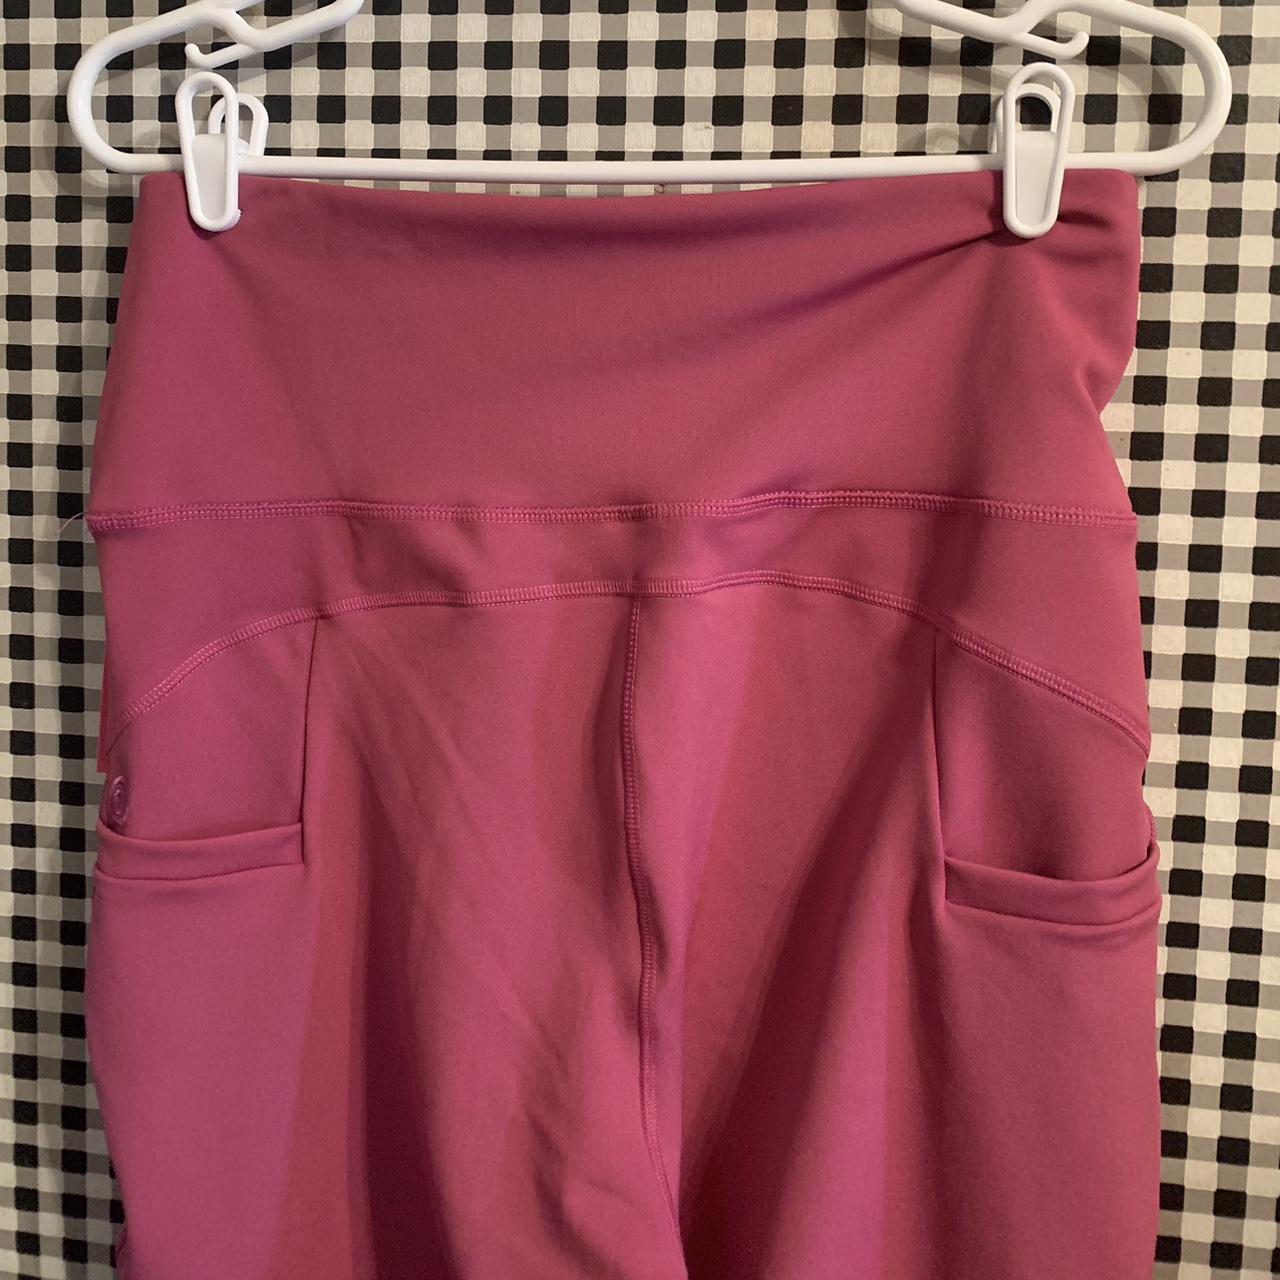 Pop Fit brand corset style leggings pinkish purple - Depop